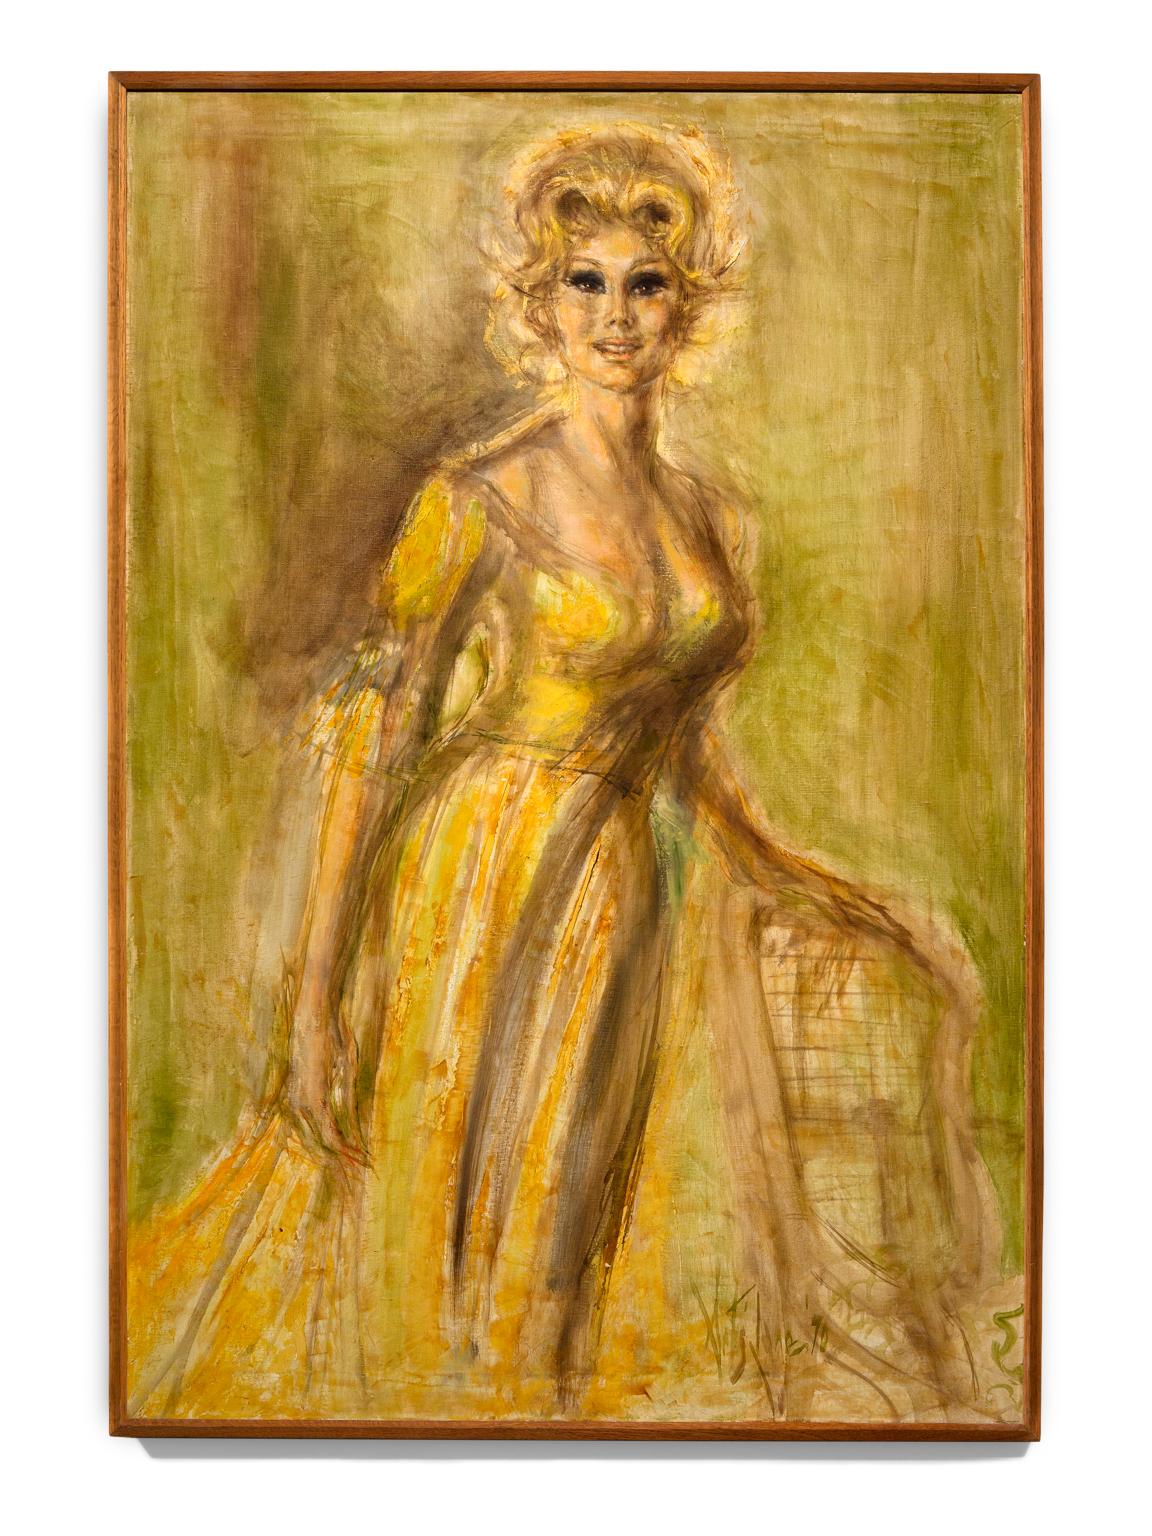 Artis Lane Portrait Painting - "Eva Gabor" Female Portrait, Golden Colors, Movie Star